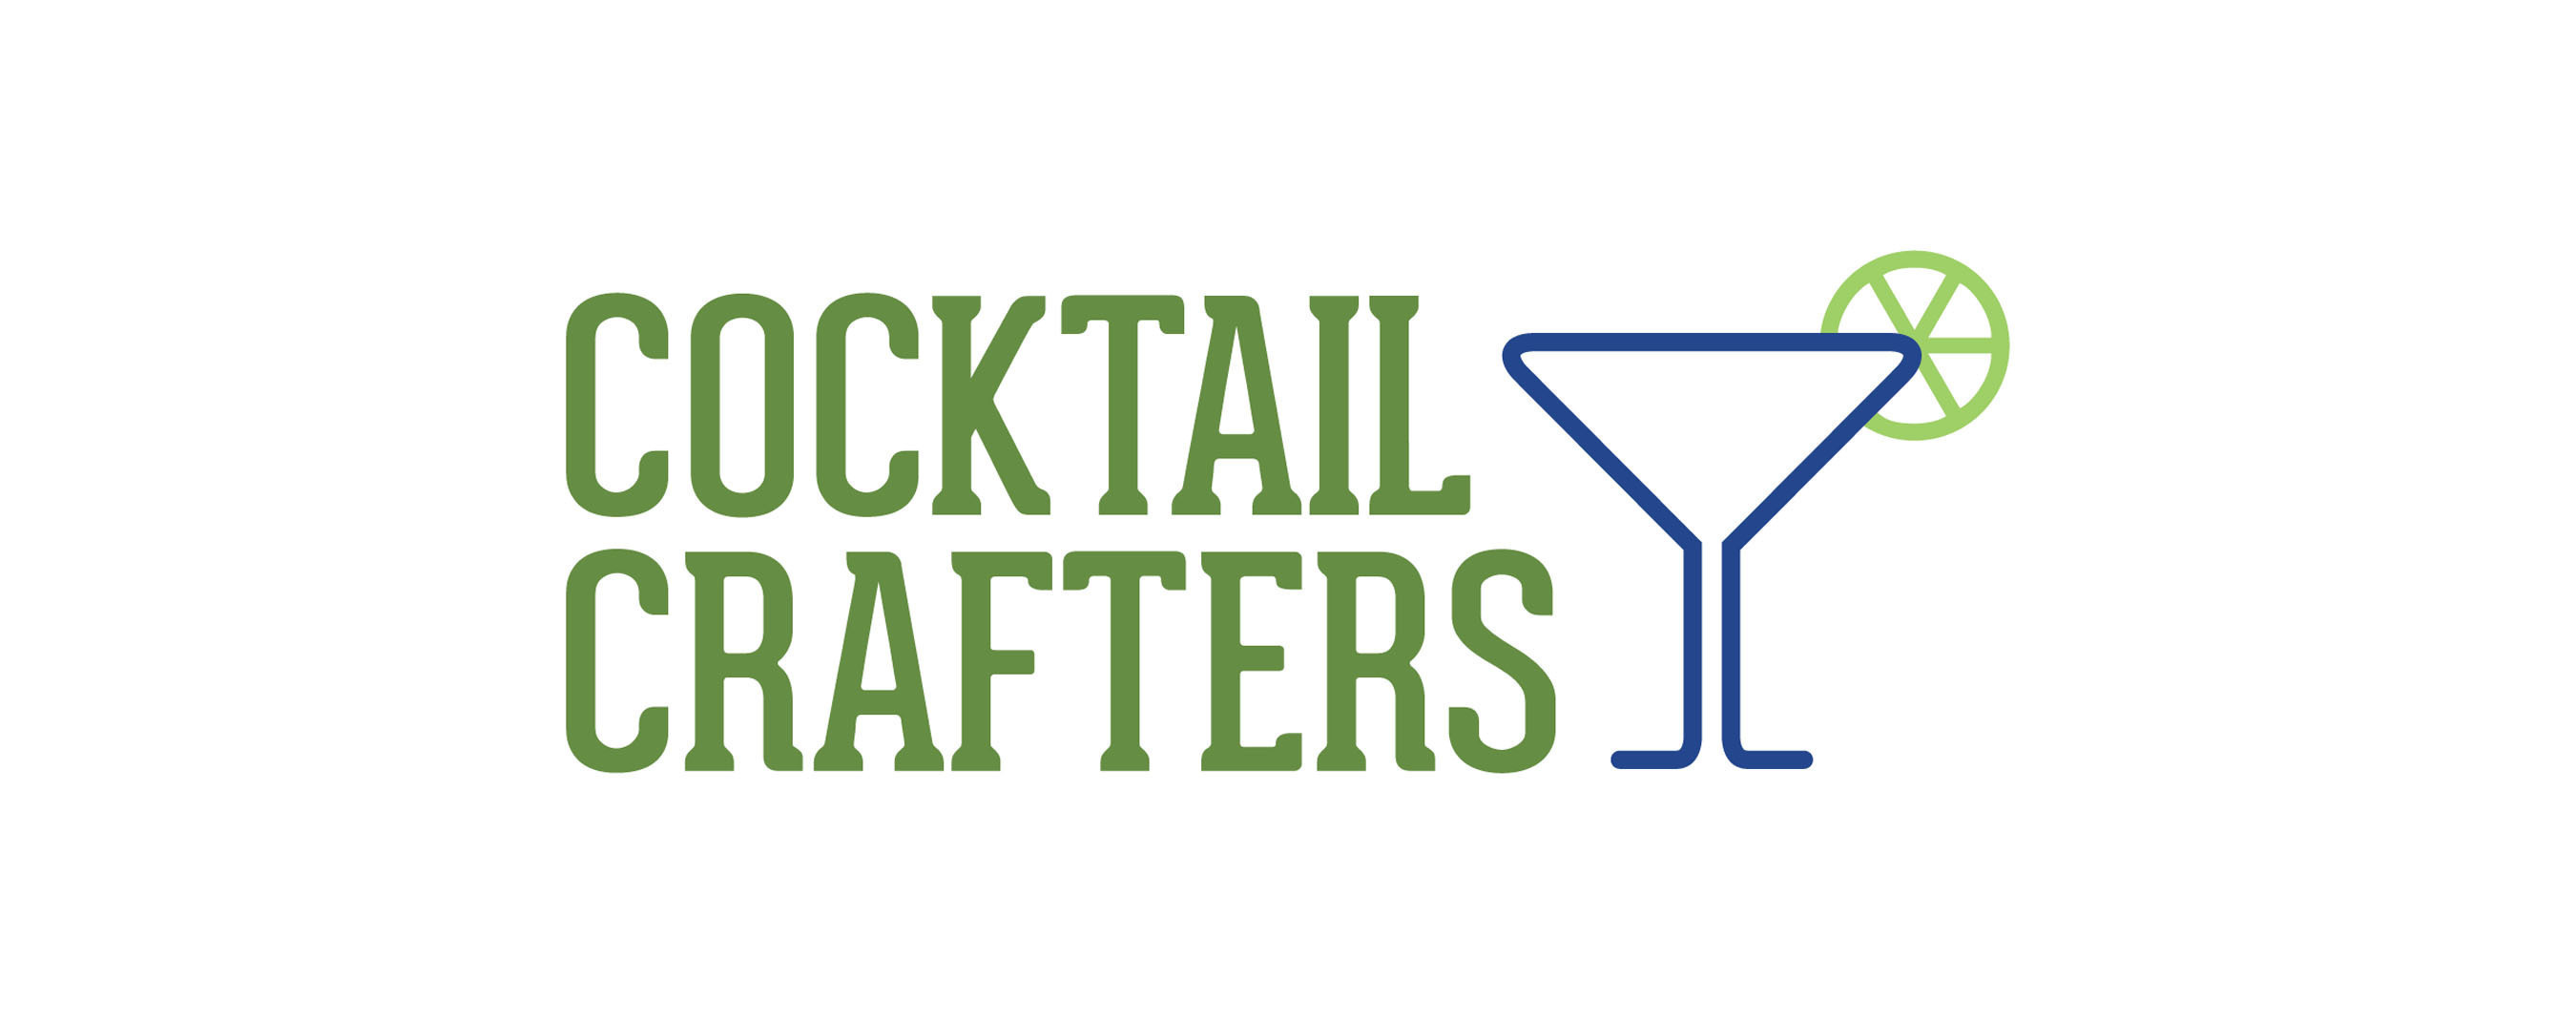 Cocktail Crafters LOGO. (PRNewsFoto/Cocktail Crafters LLC) (PRNewsFoto/COCKTAIL CRAFTERS LLC)